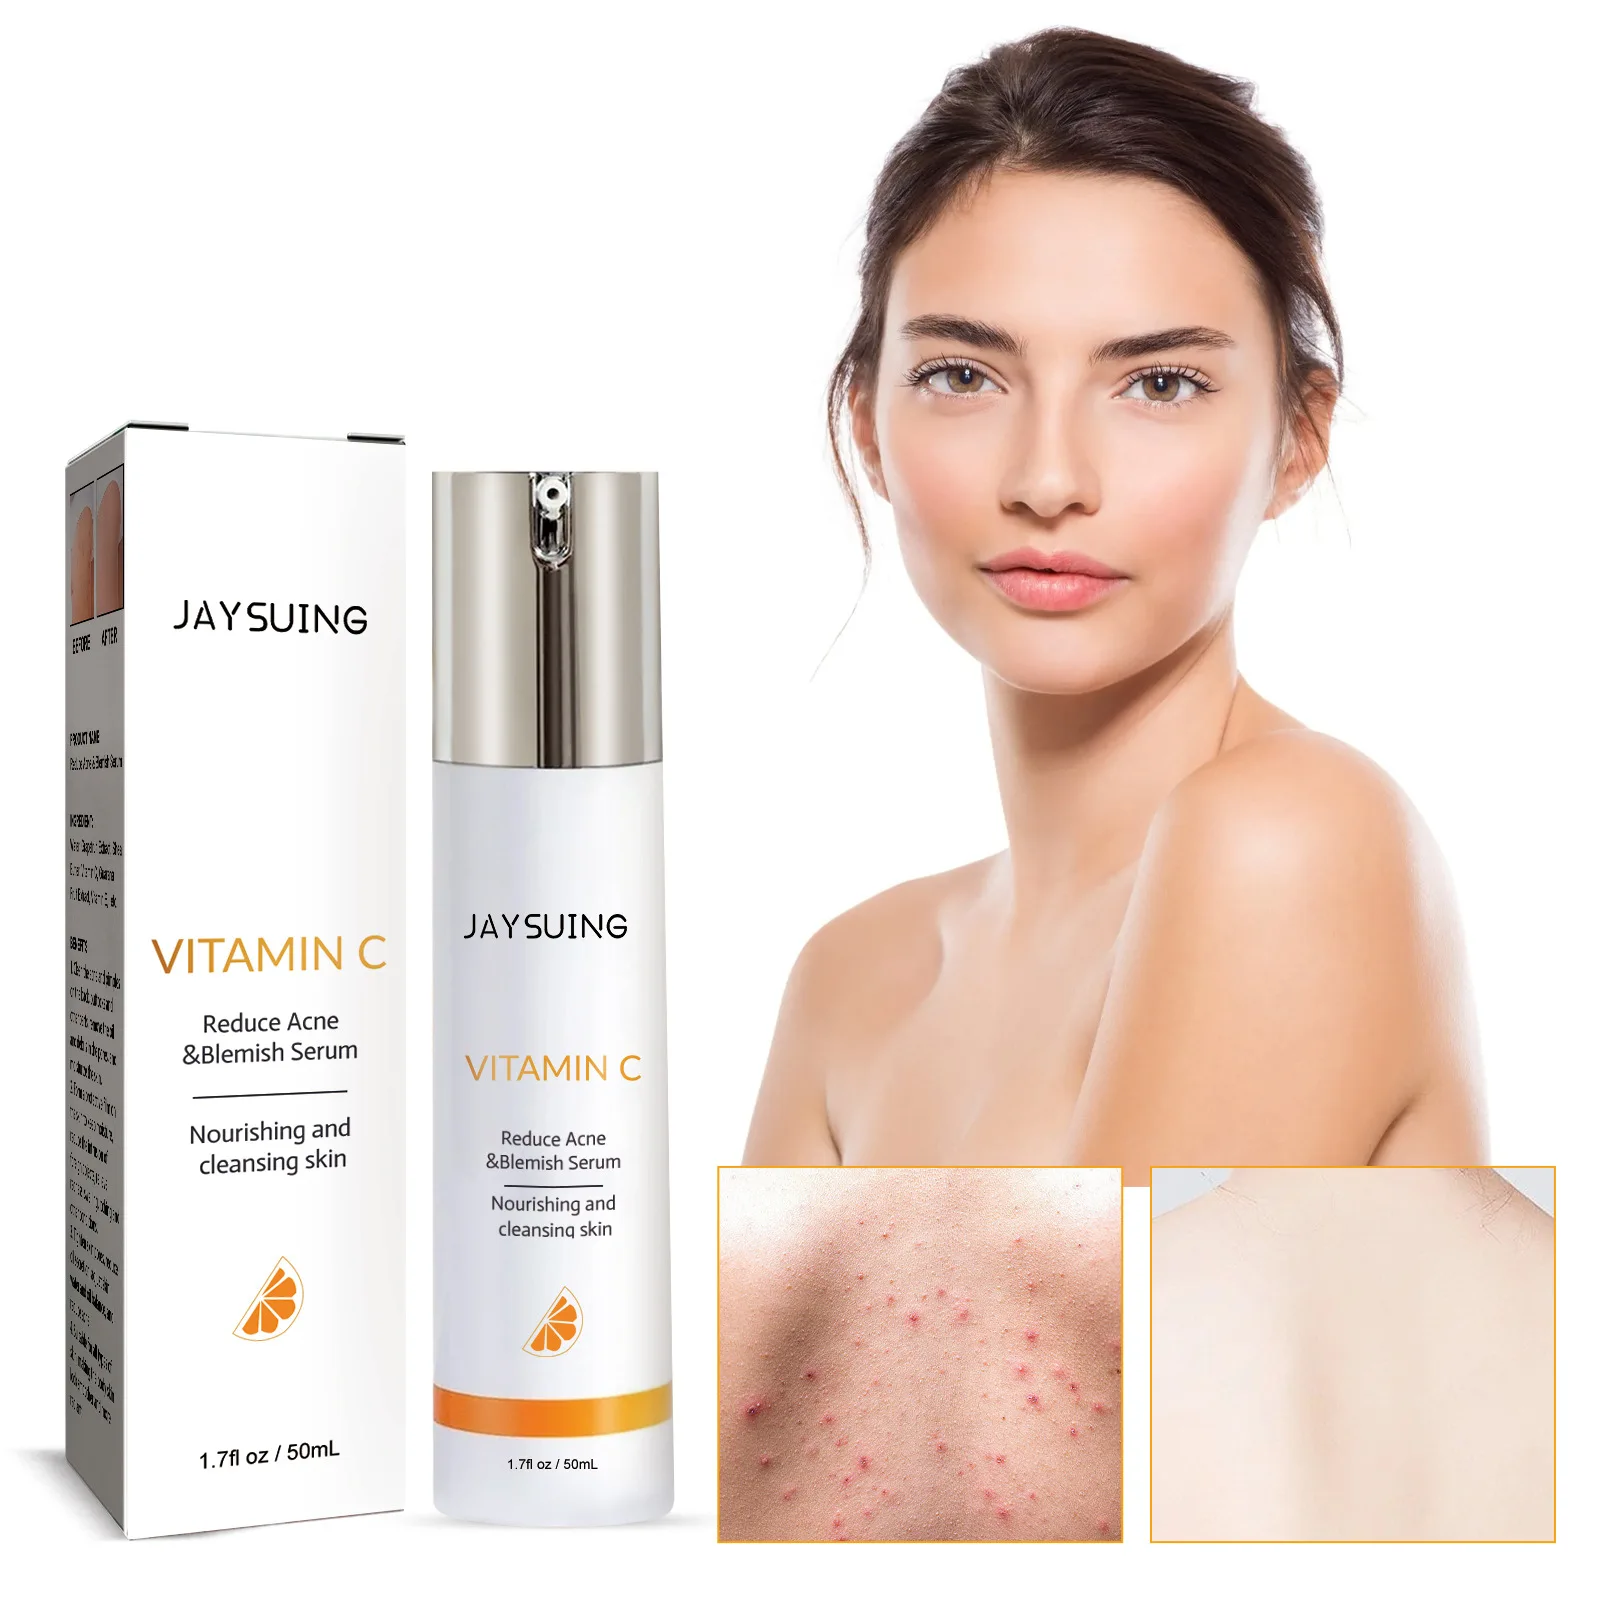 

Reduce Acne & Blemish Serum Relieve Redness Swelling Itching Tighten Pores Balance Water Oil Remove Black Spots Brighten Skin